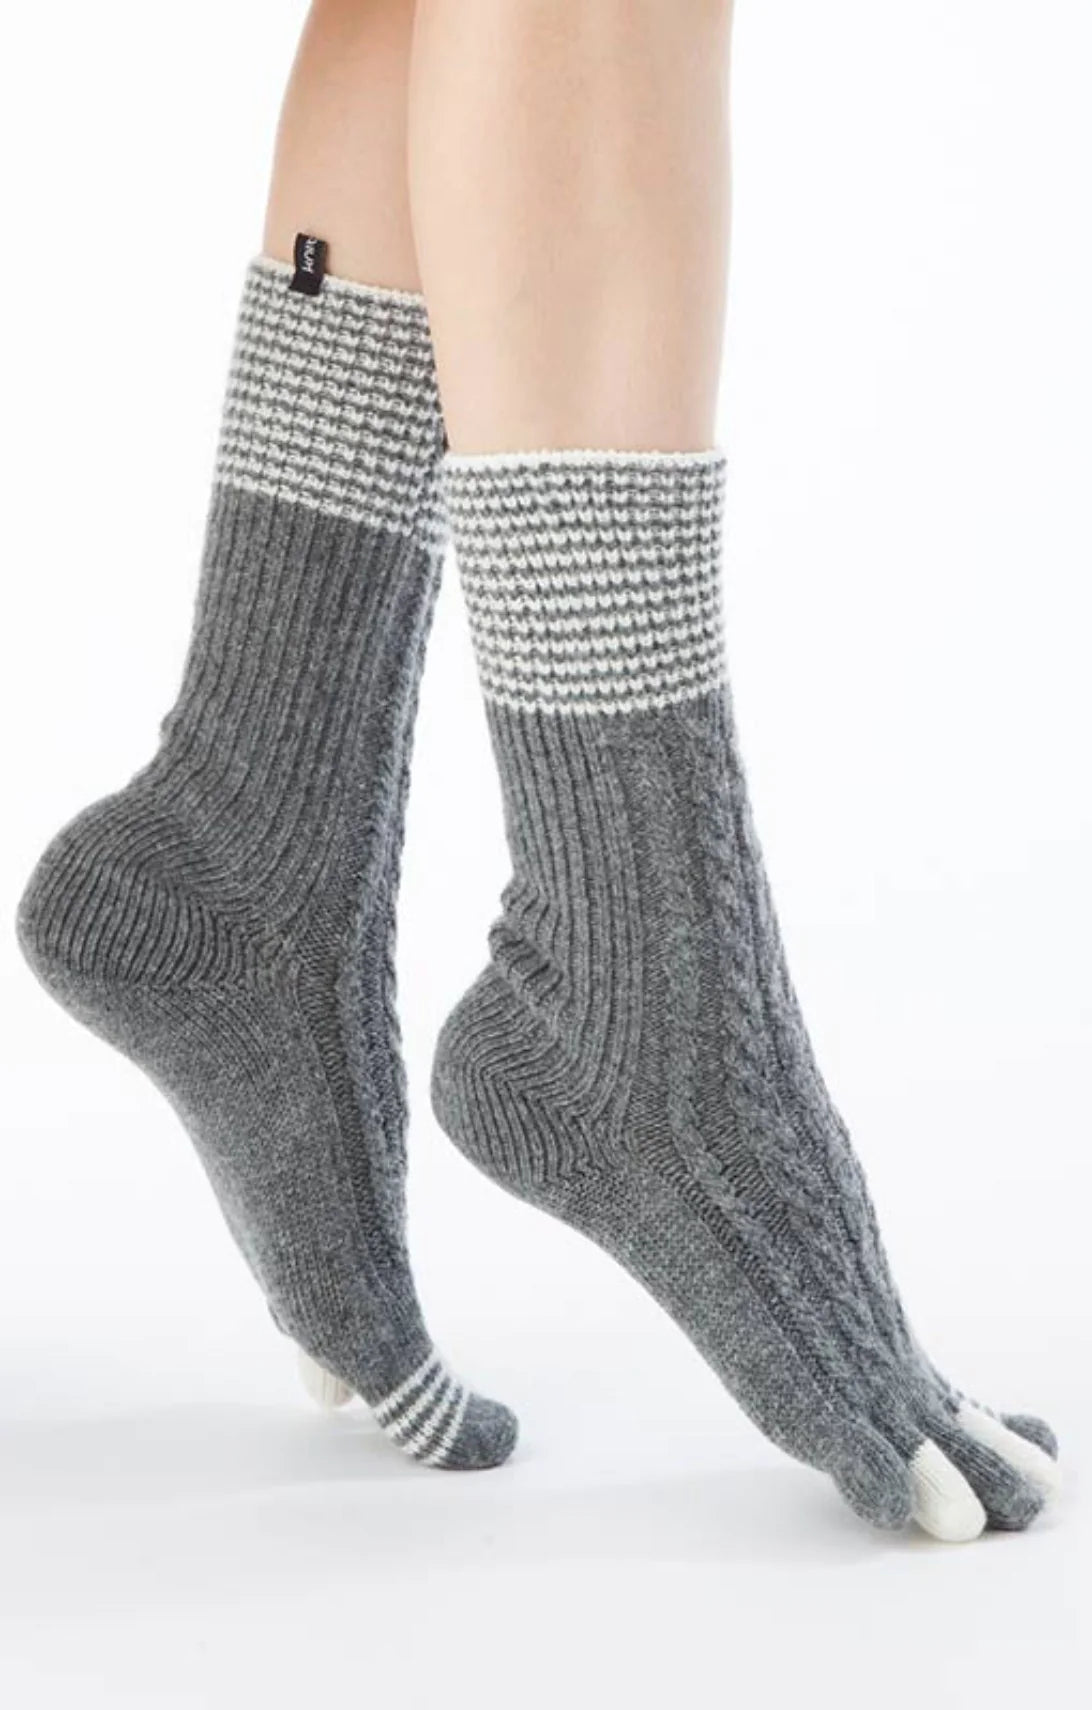 Knitido Dr. Foot Comfort Toe Socks